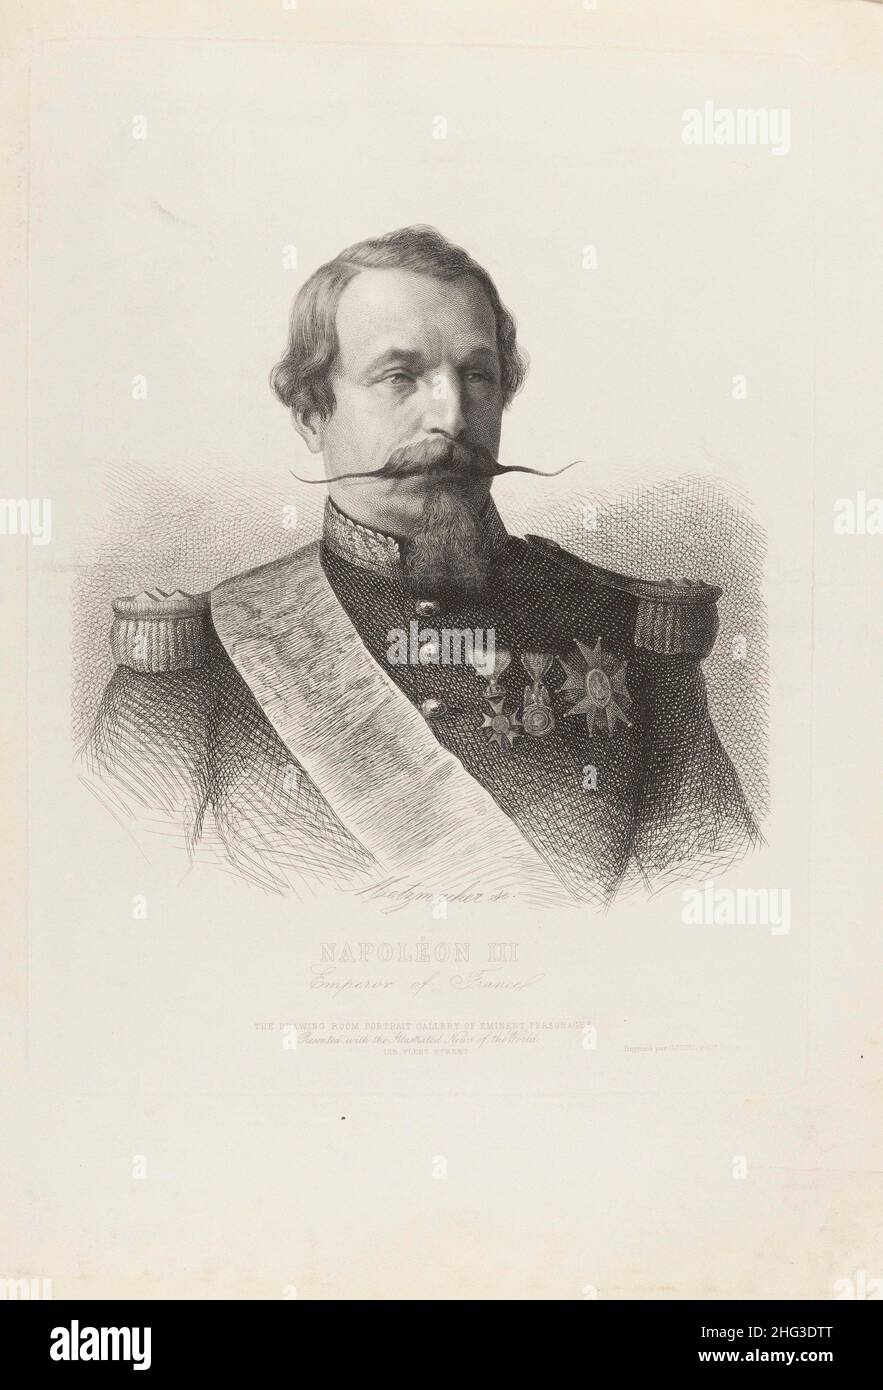 Portrait of Napoleon III. 1858-1870, by Pierre Guillaume Metzmacher (1815-post 1870) – graphic artist. Napoleon III (1808 – 1873) was the first Presid Stock Photo